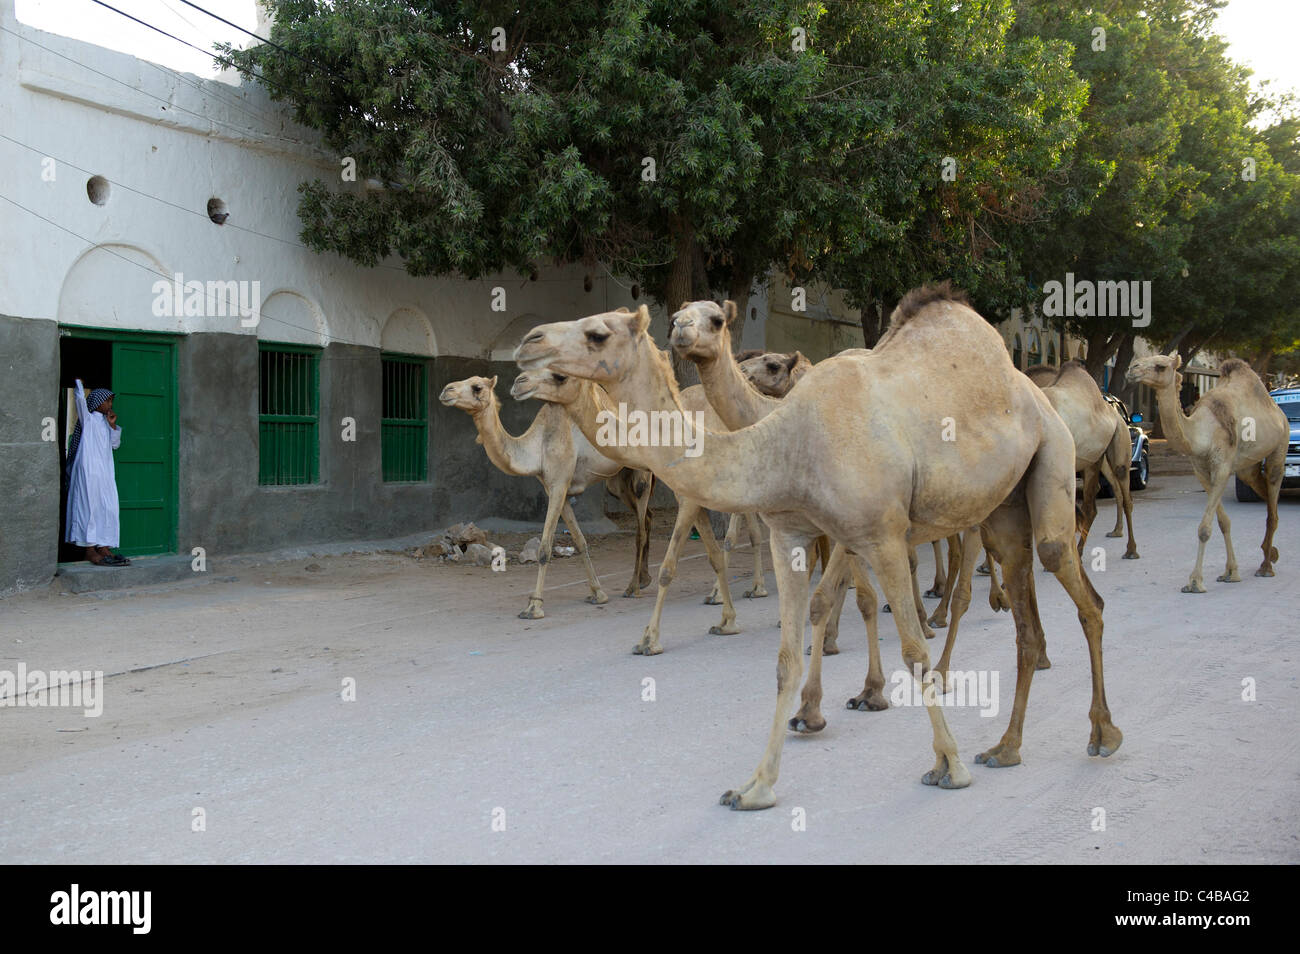 Camels walking in the street, Berbera, Somaliland, Somalia Stock Photo